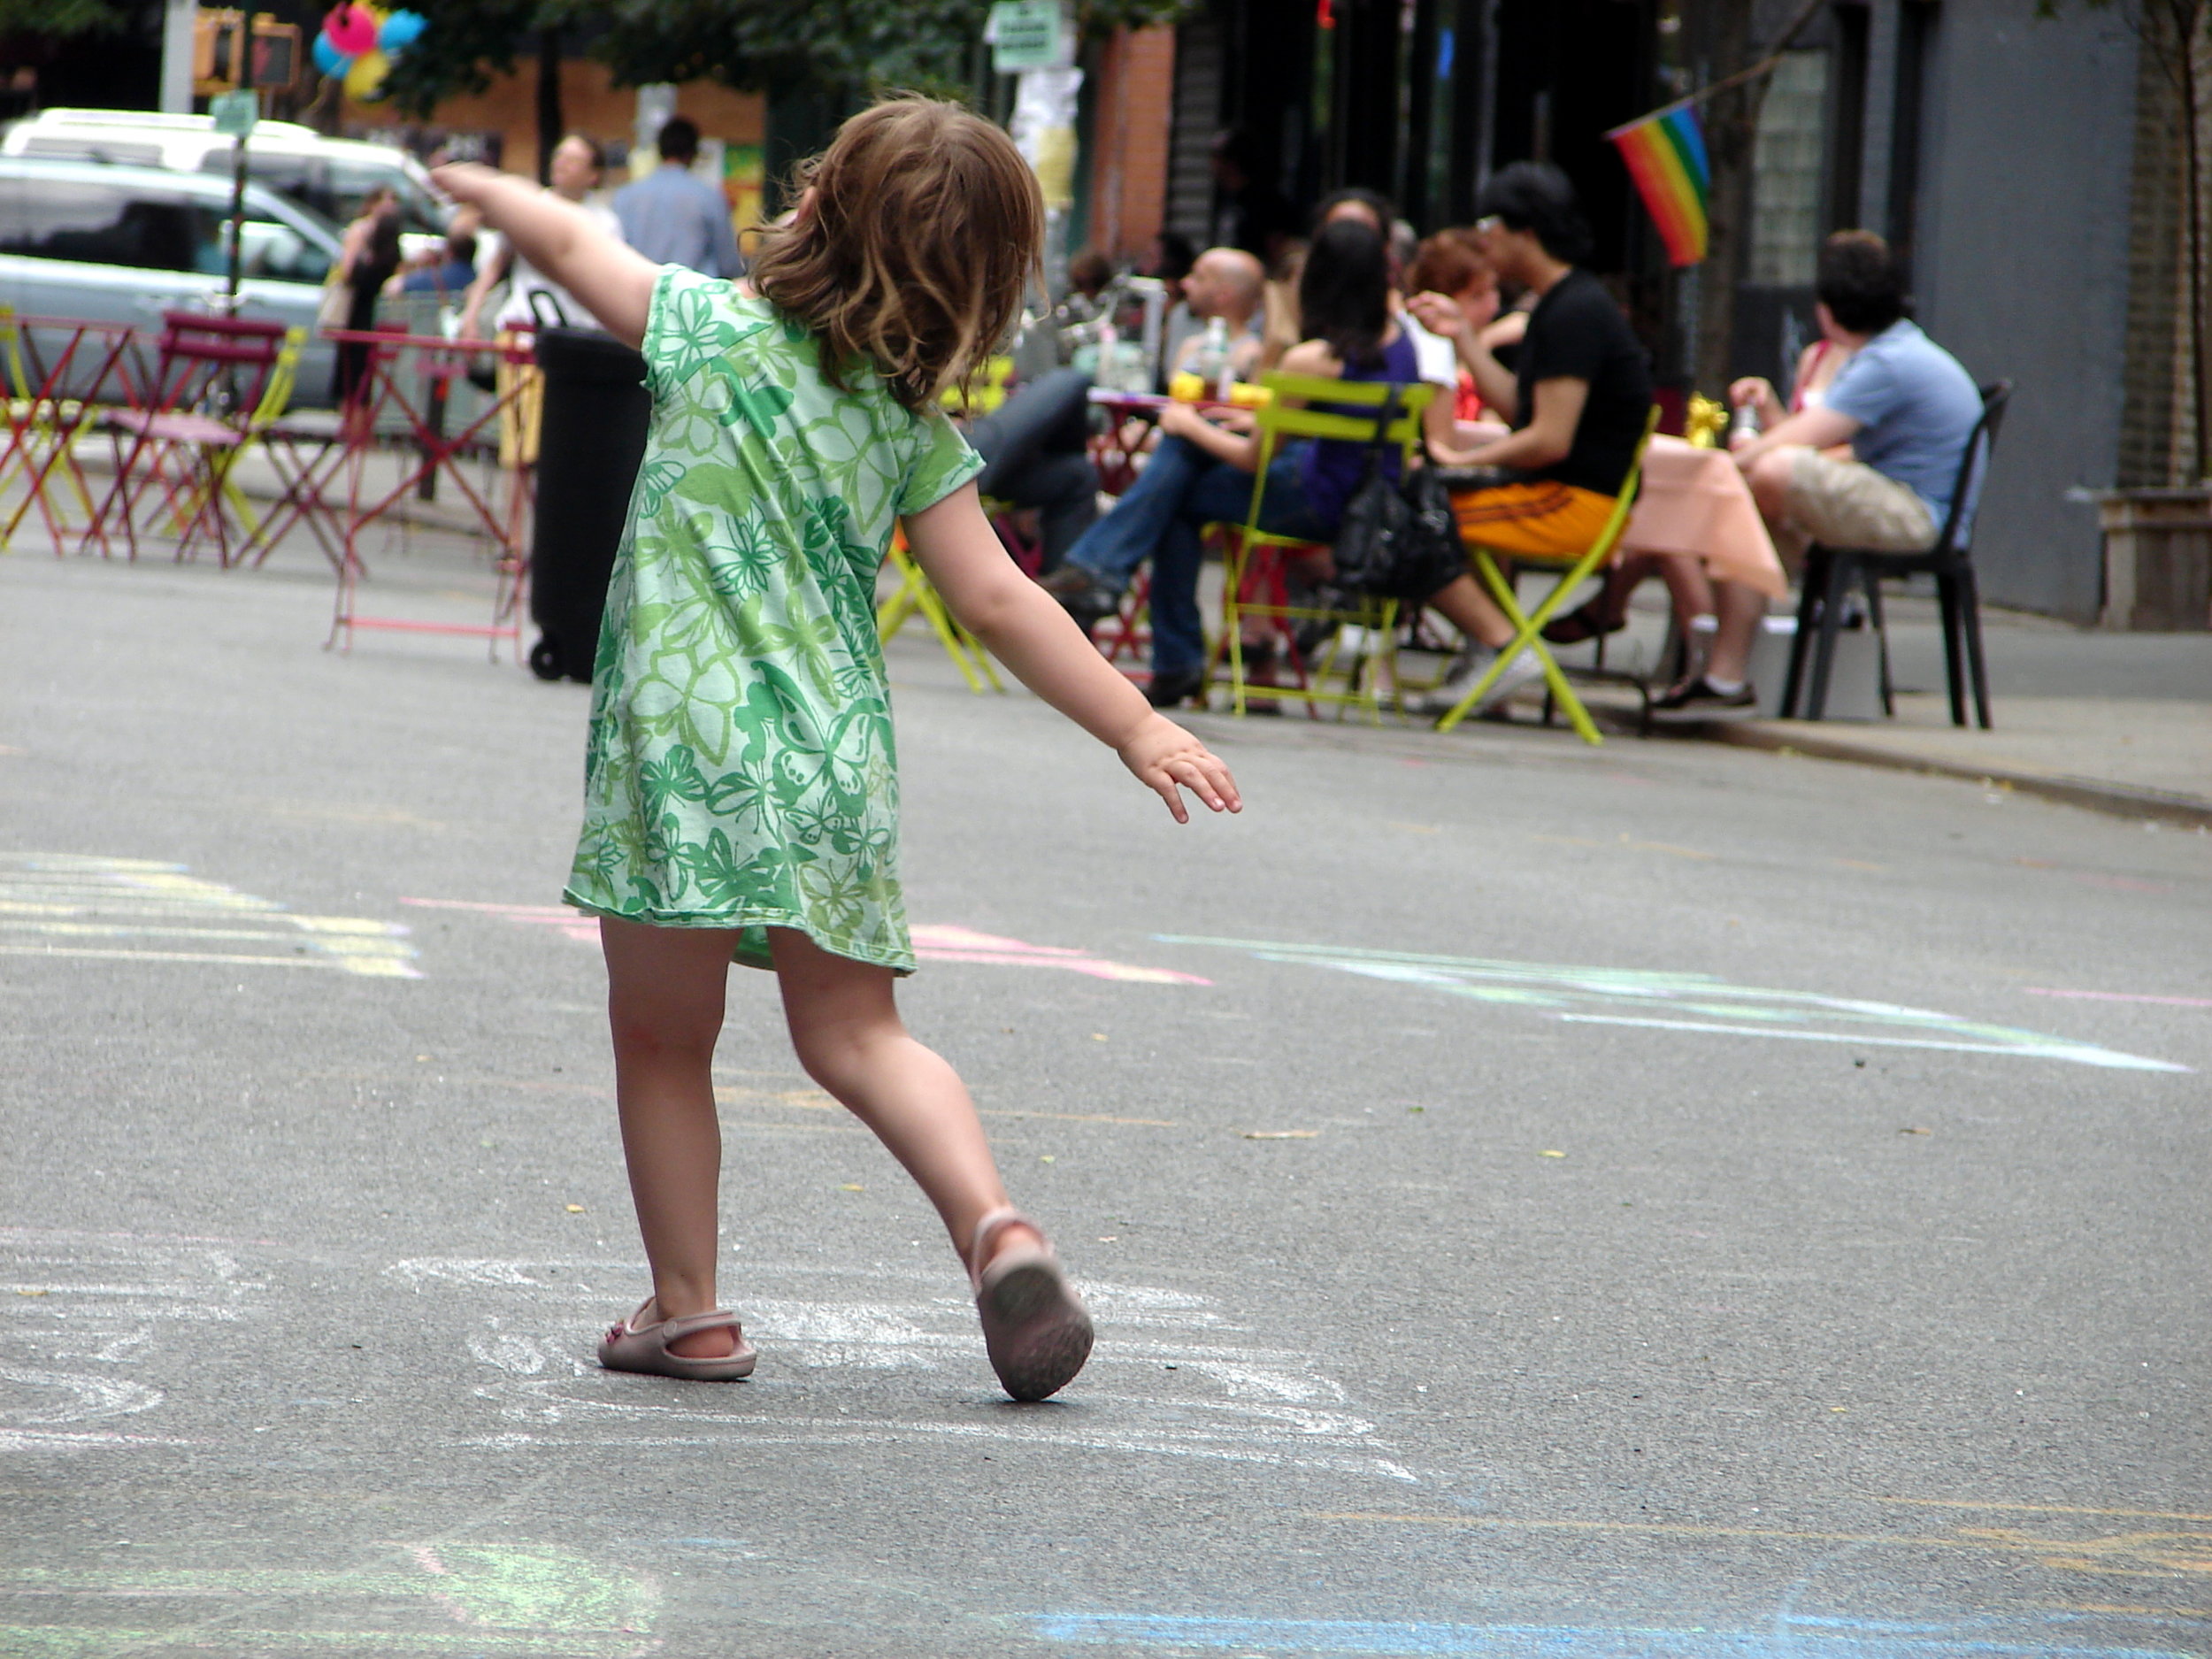 NYC Streets Flickr Kid Playing In Street.jpg